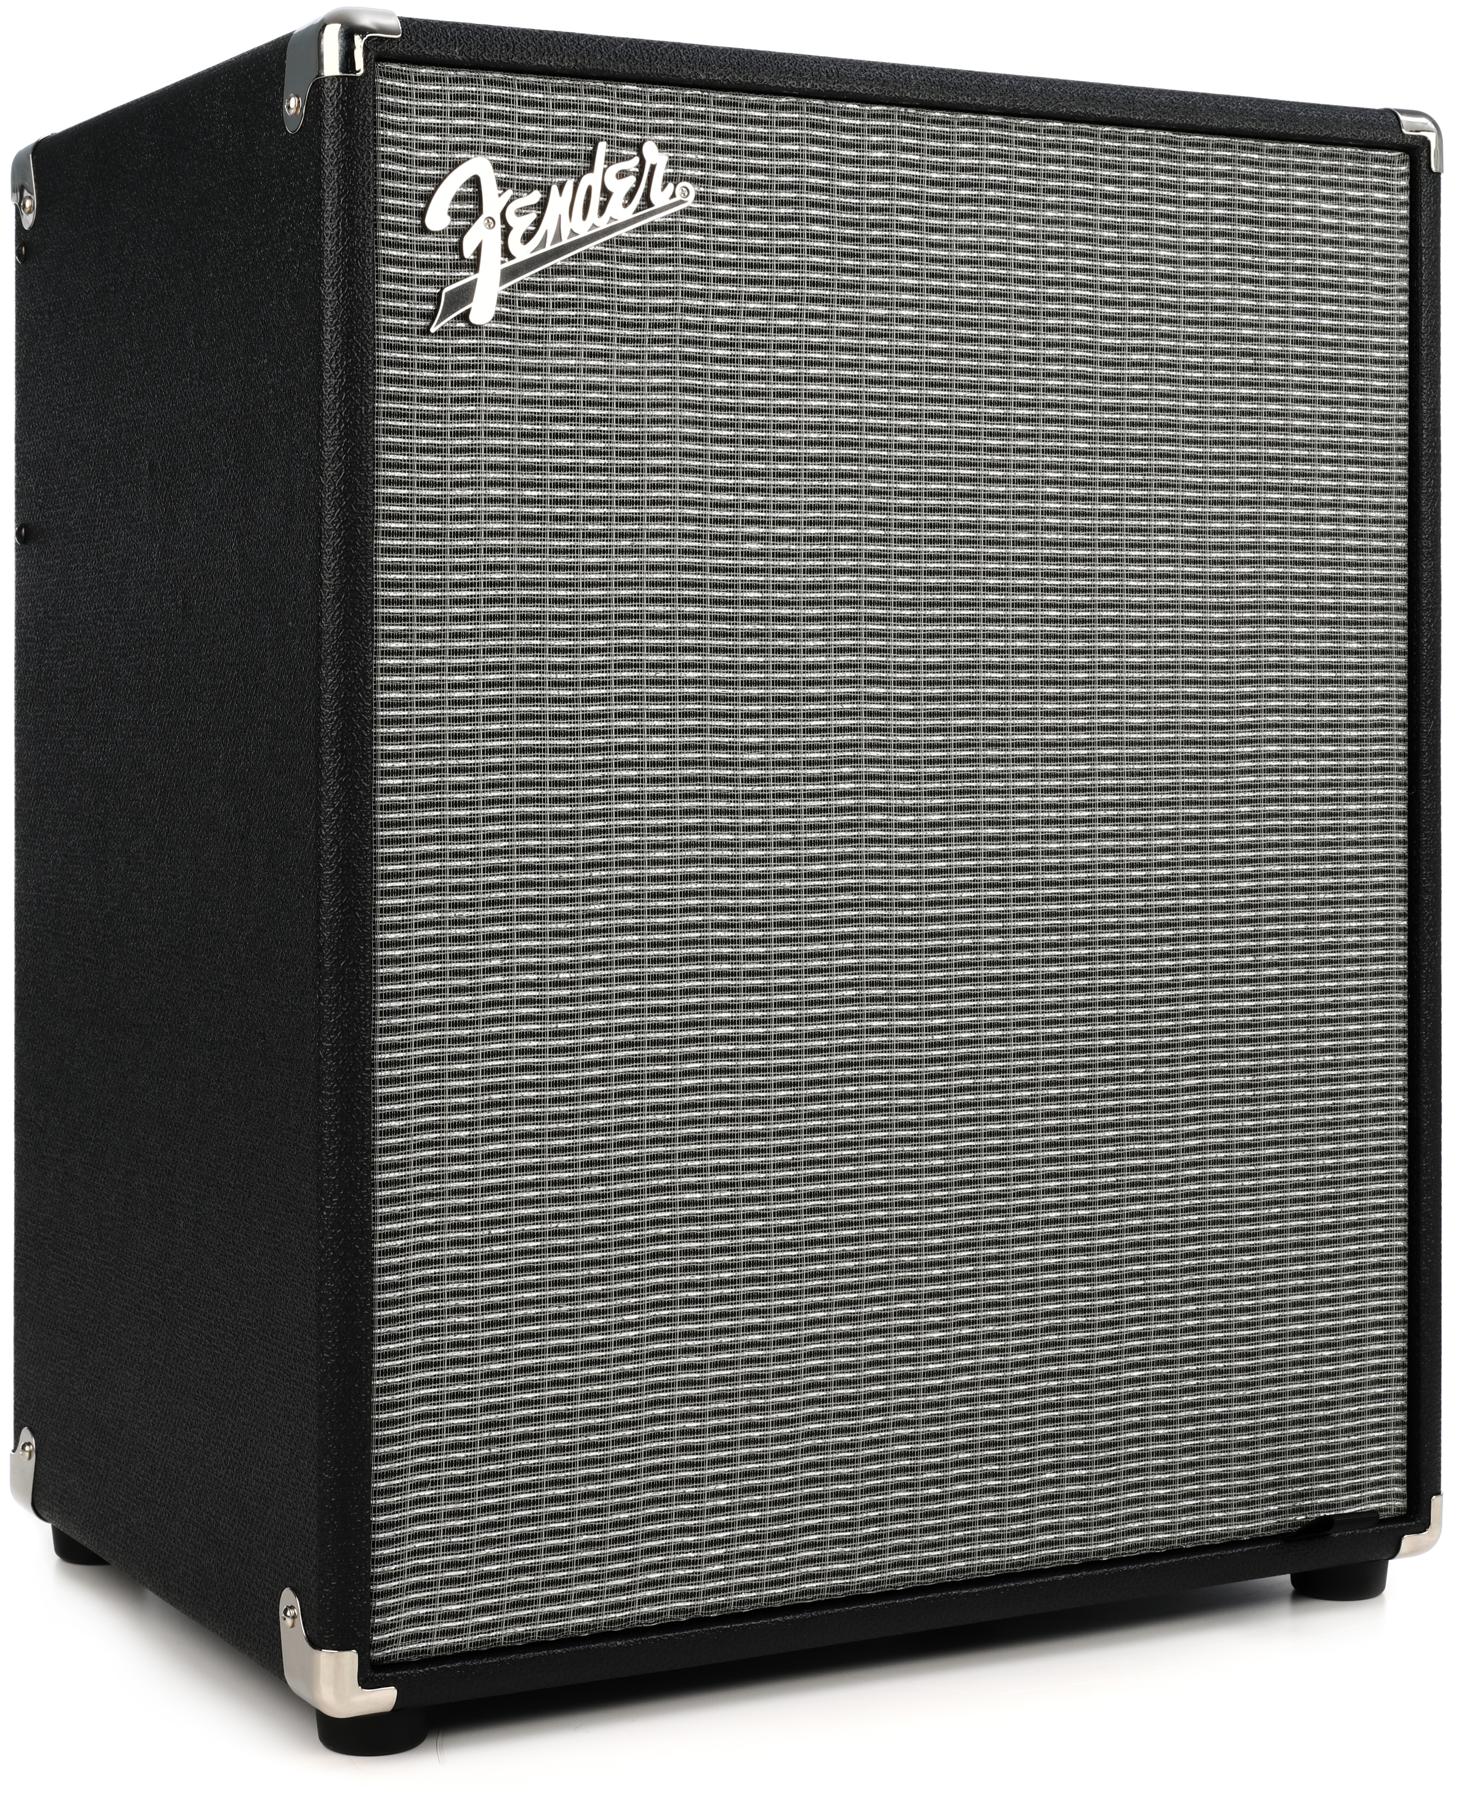 1. Fender Rumble 500 2x10" 500-watt Bass Combo Amp